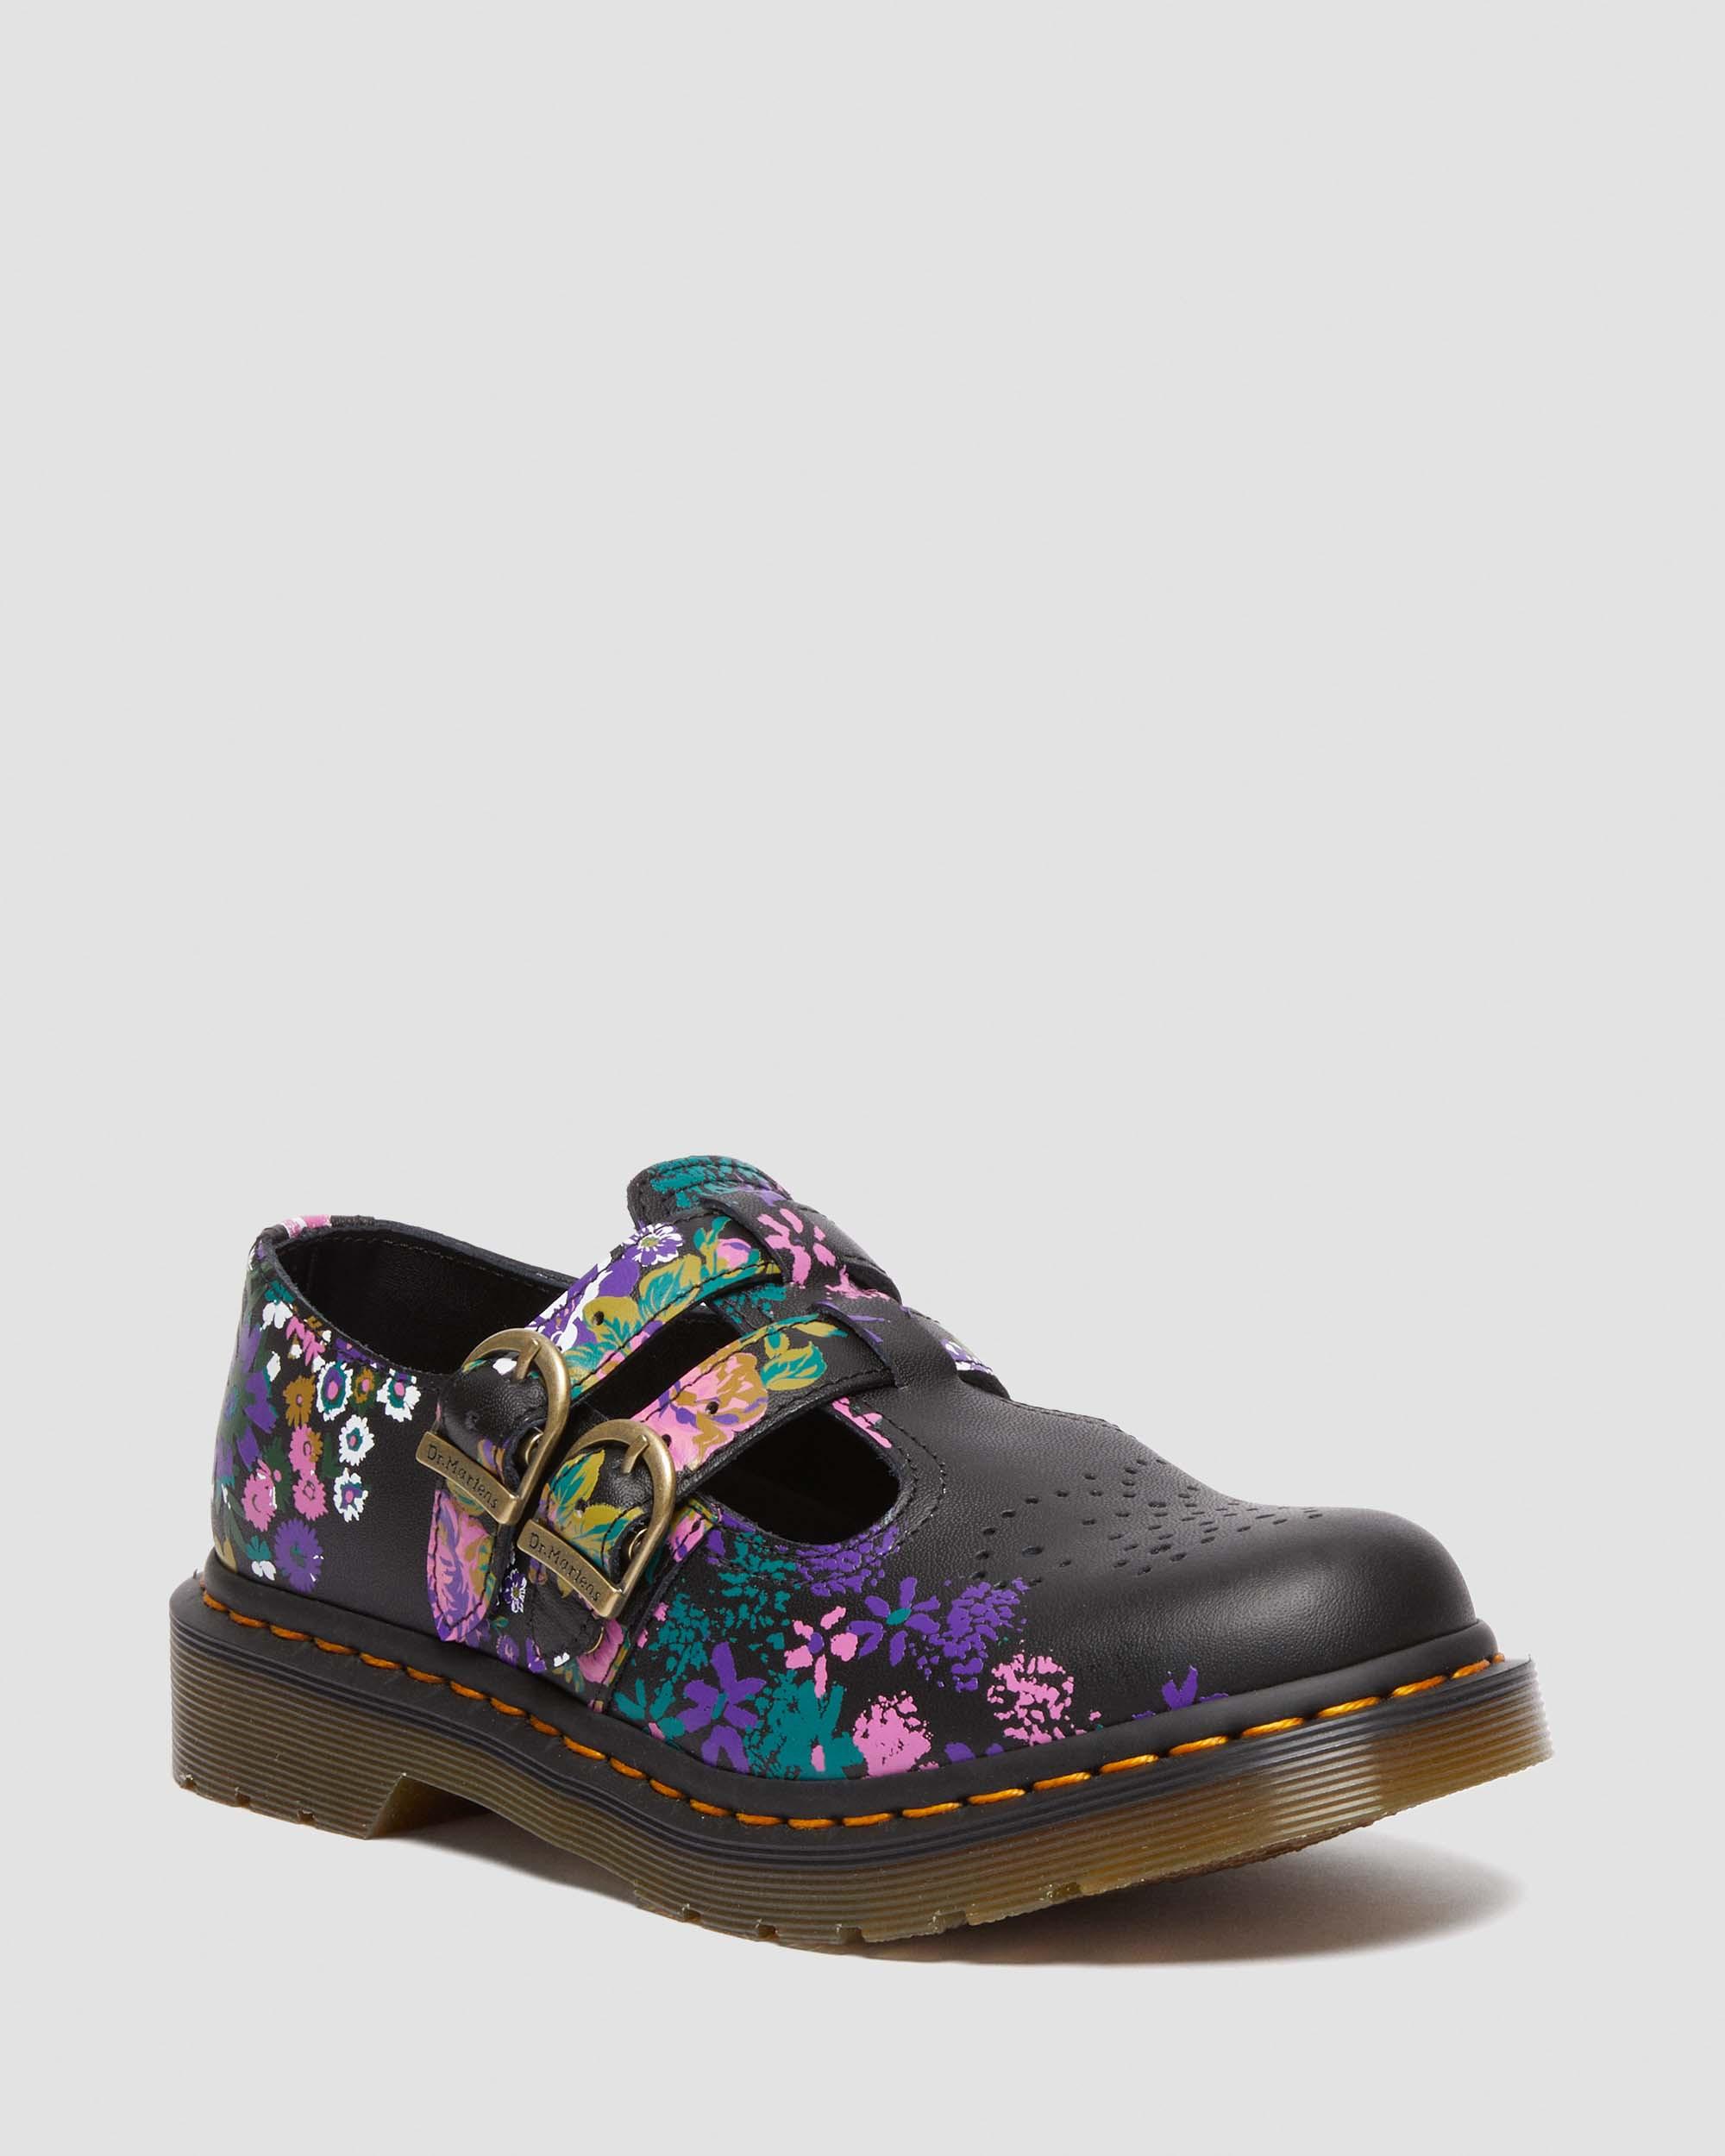 8065 Vintage Floral Leather Mary Jane Shoes in Black | Dr. Martens